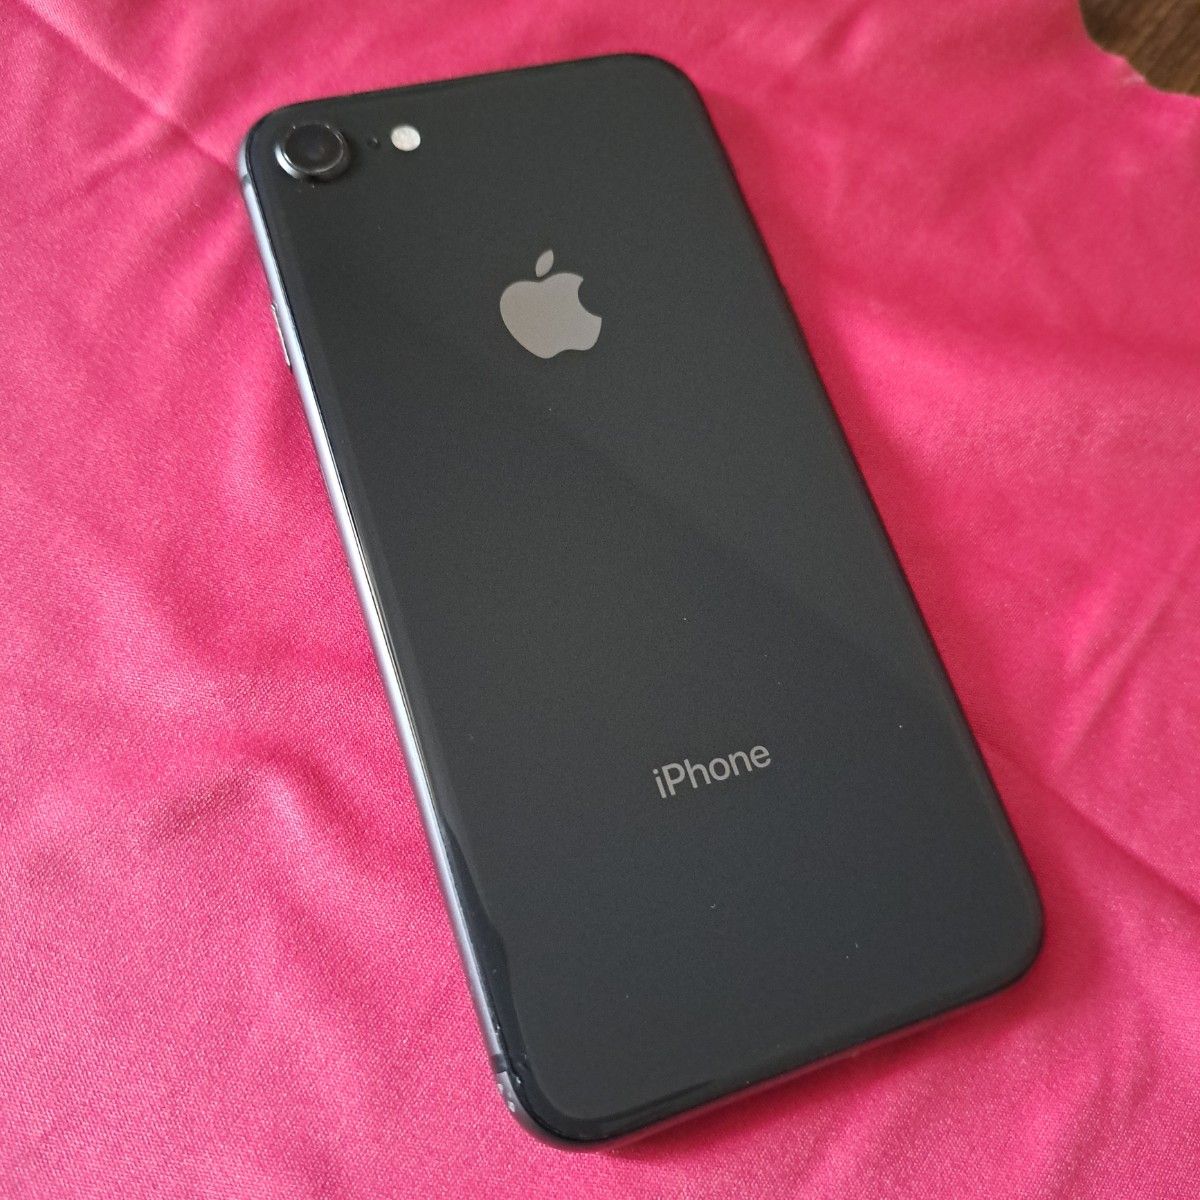 ☆《iPhone 8》64GB 本体スペースグレー SIMフリー apple-